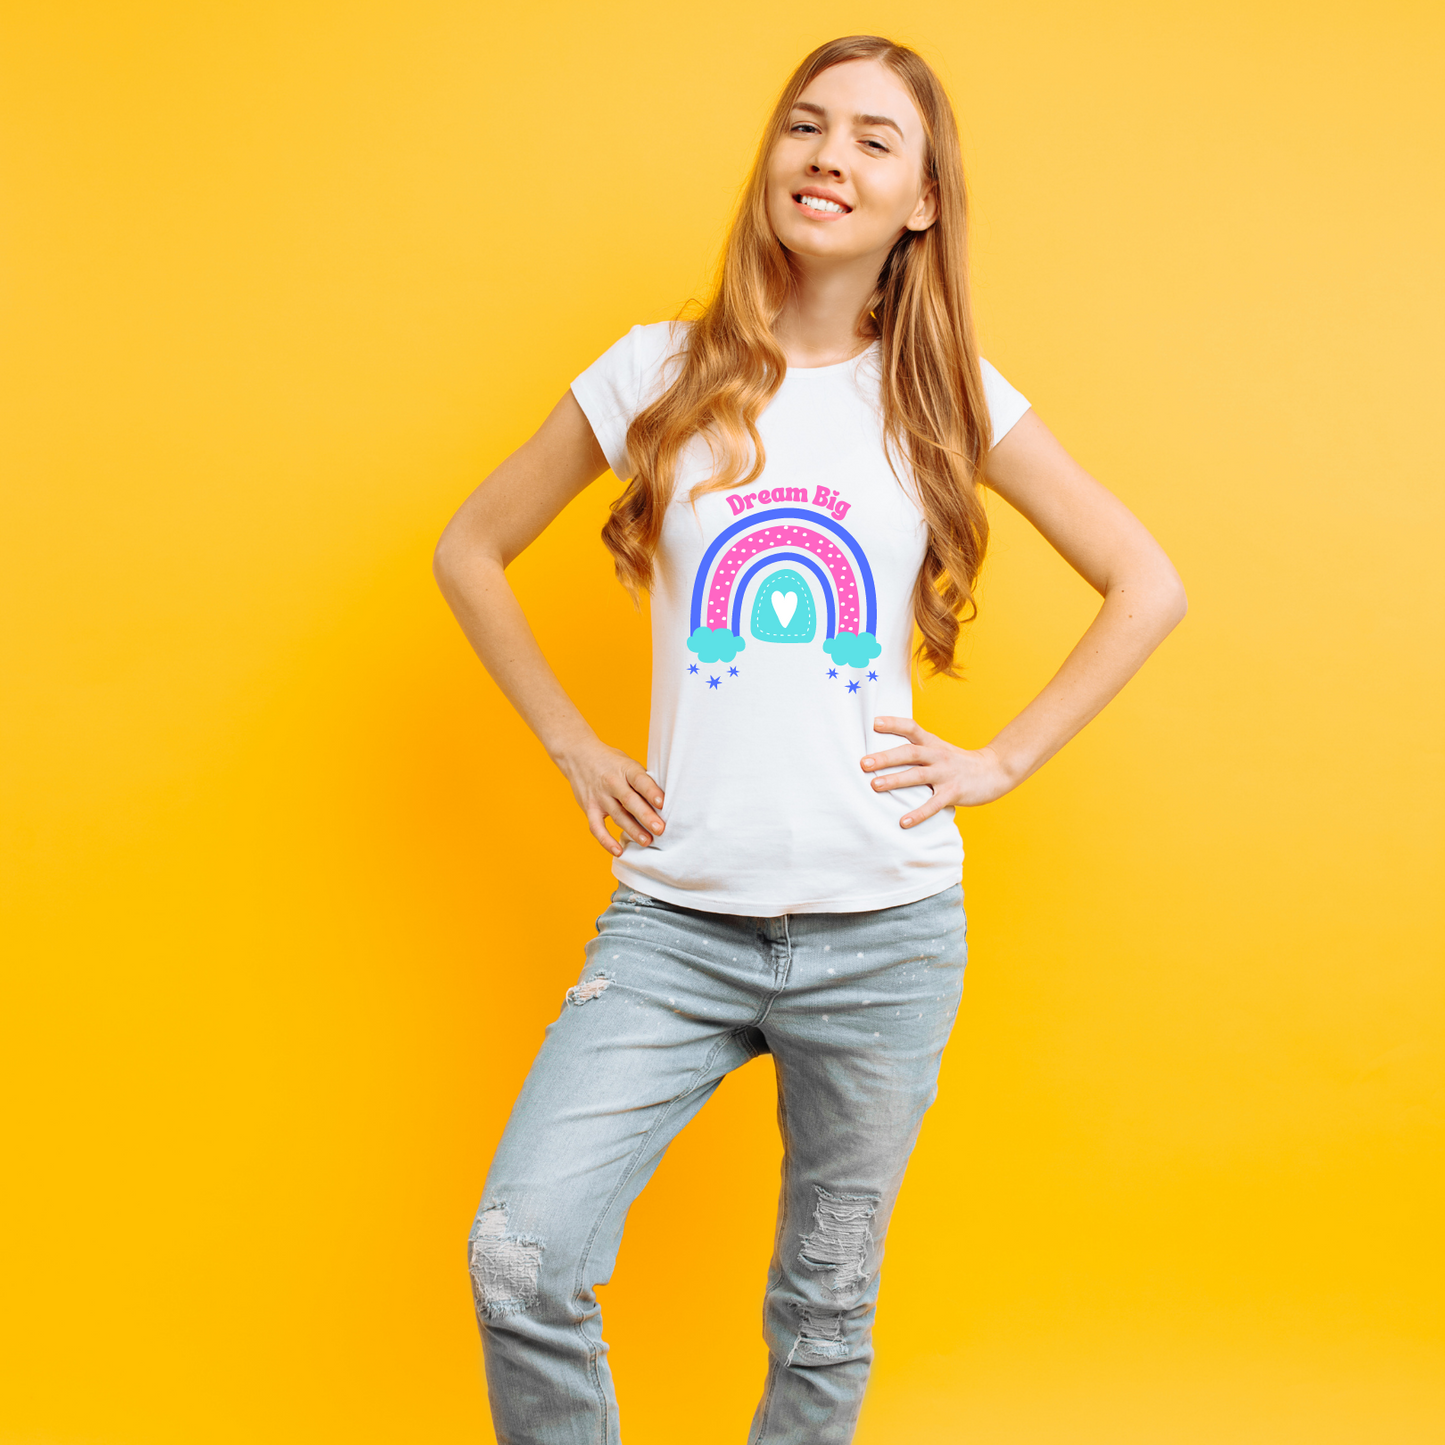 Dream Big - short sleeve T-shirt for teens and tweens